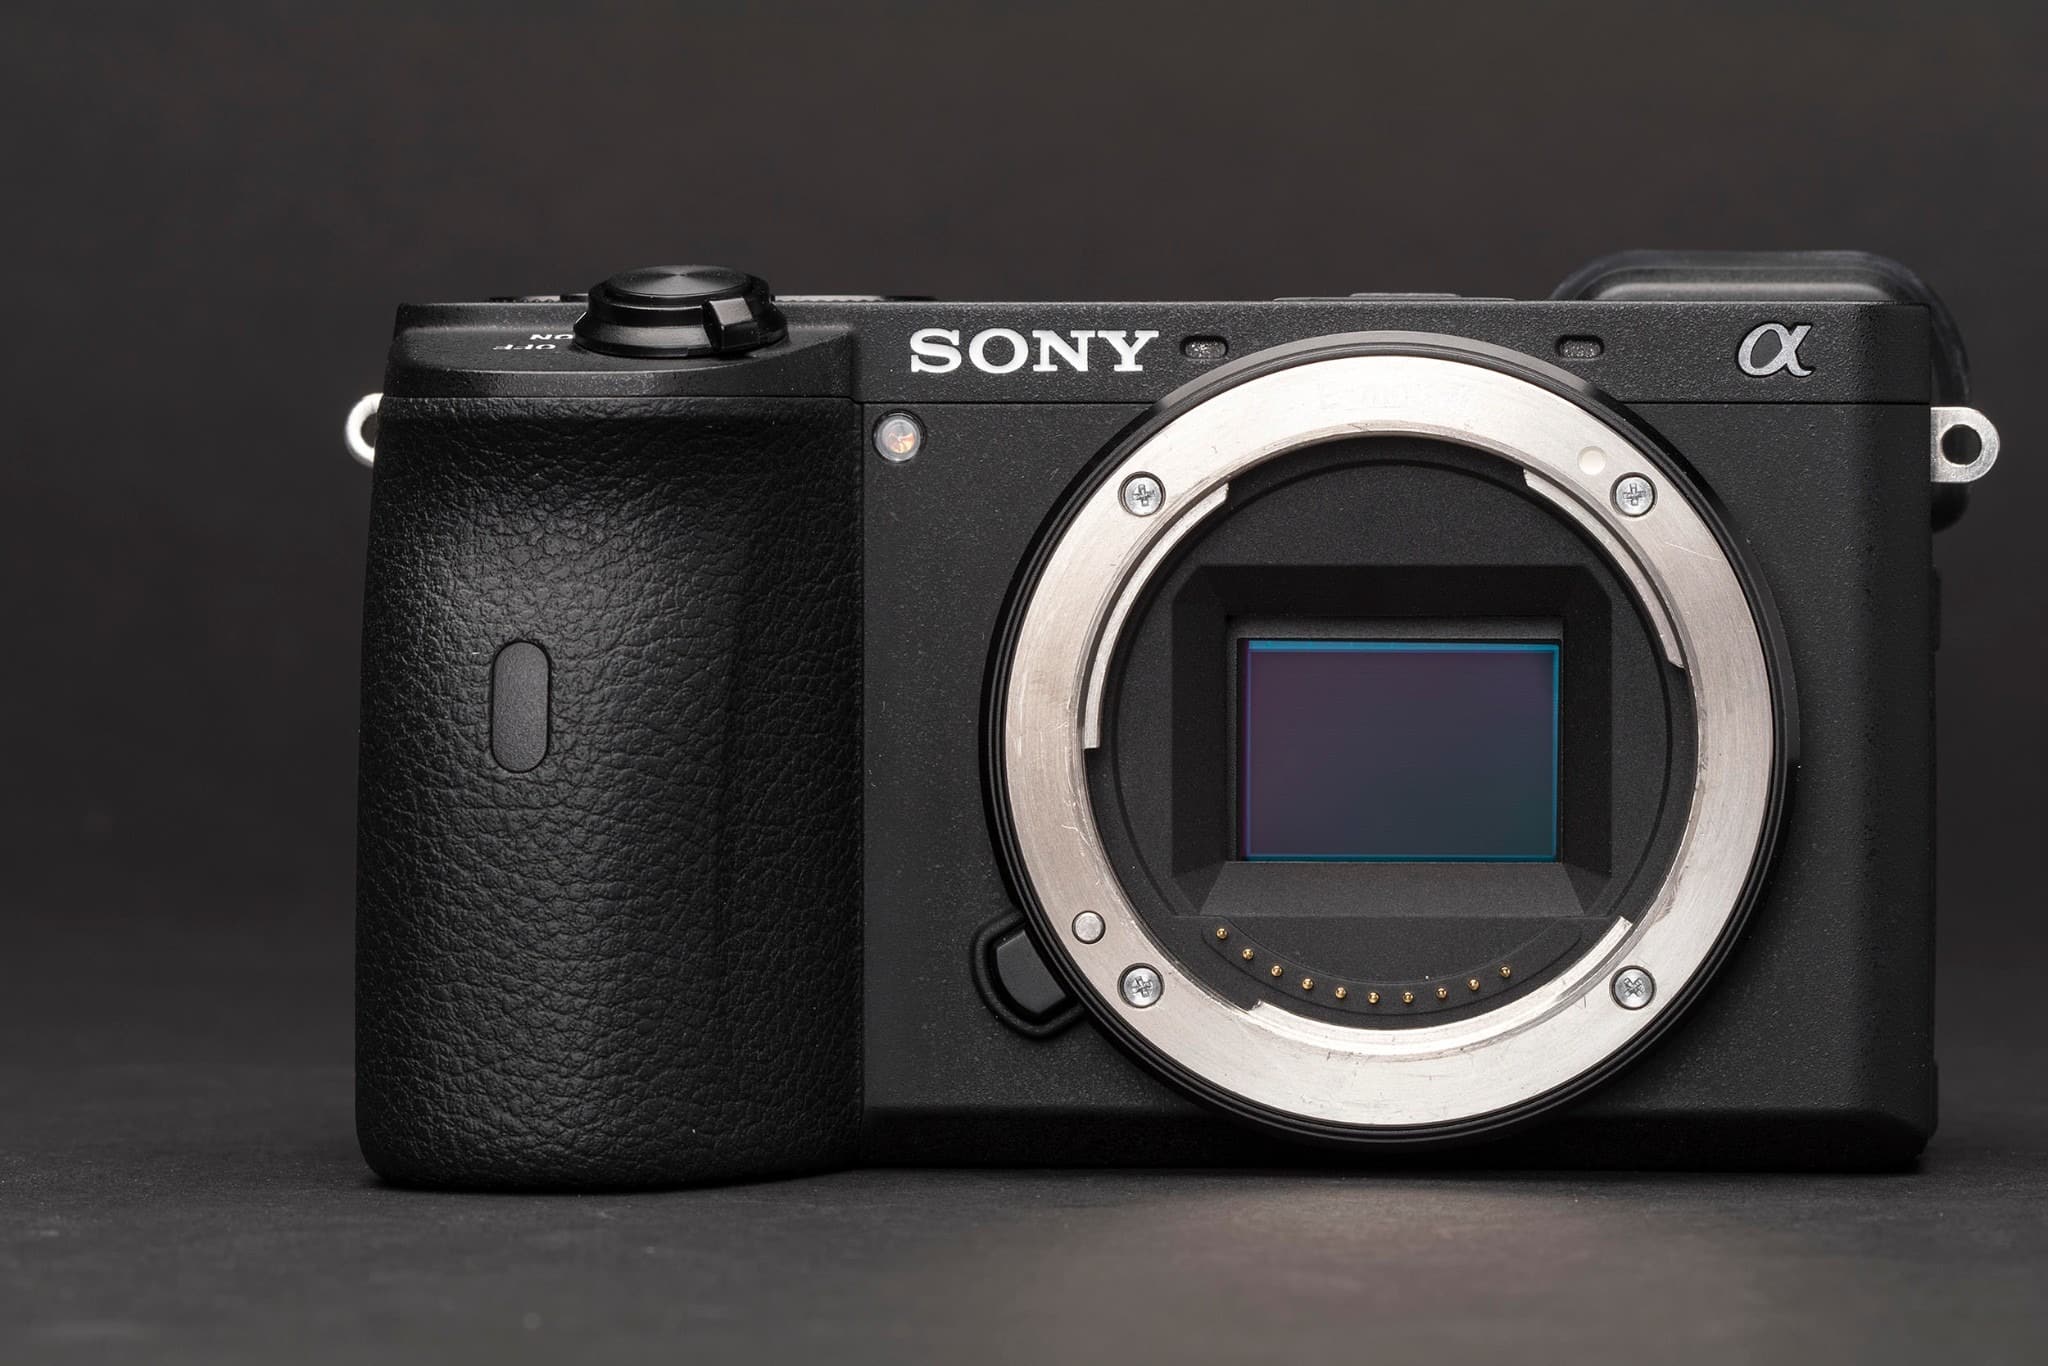 Máy ảnh Sony Alpha A6600